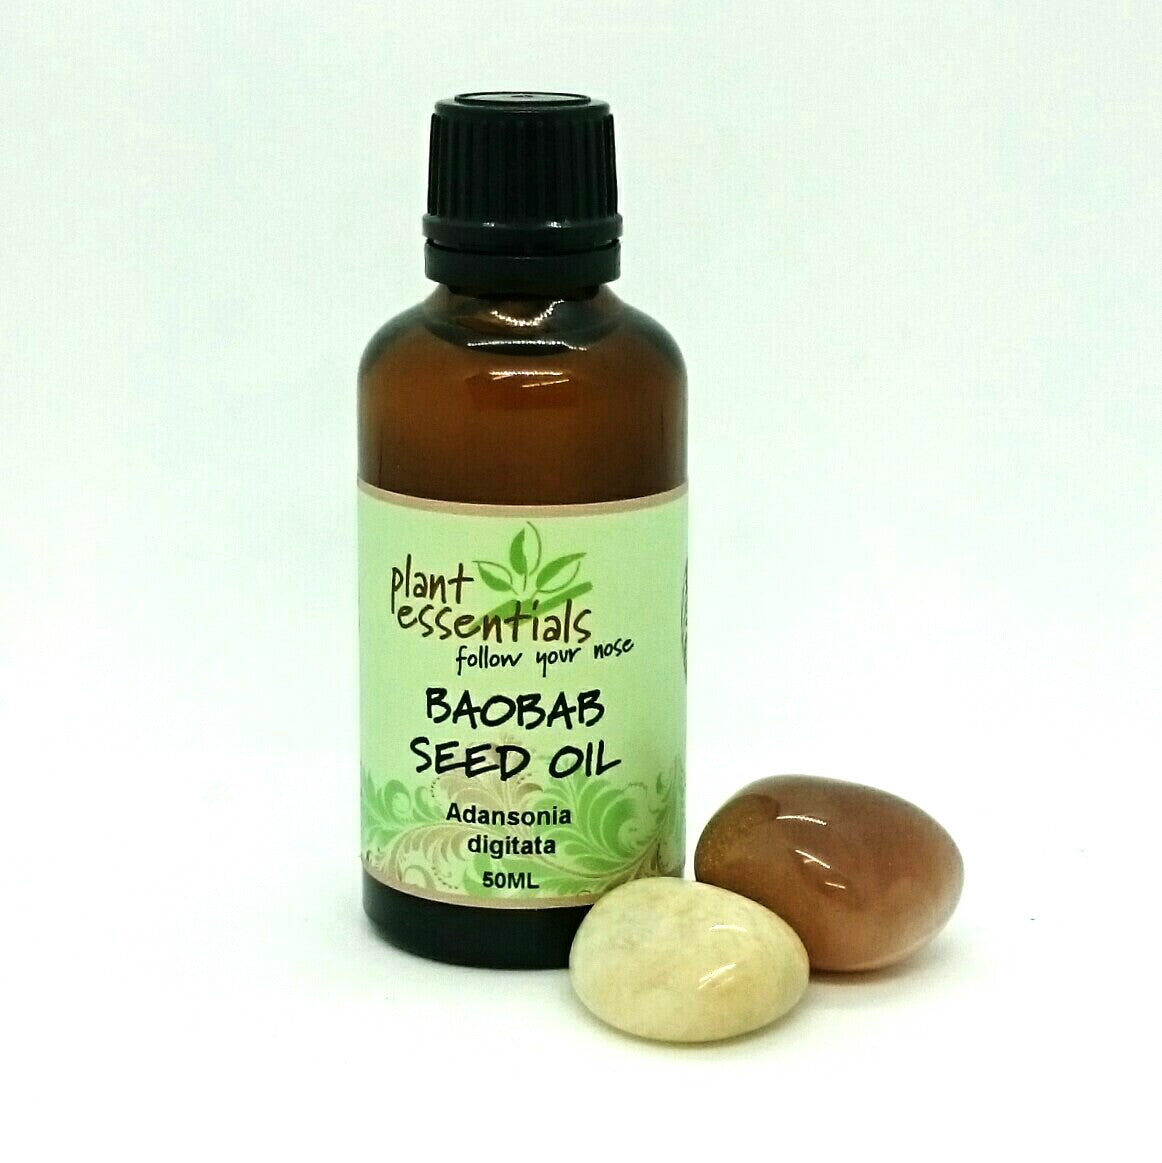 Baobab Seed Oil ~ Andansonia digitata 50ml